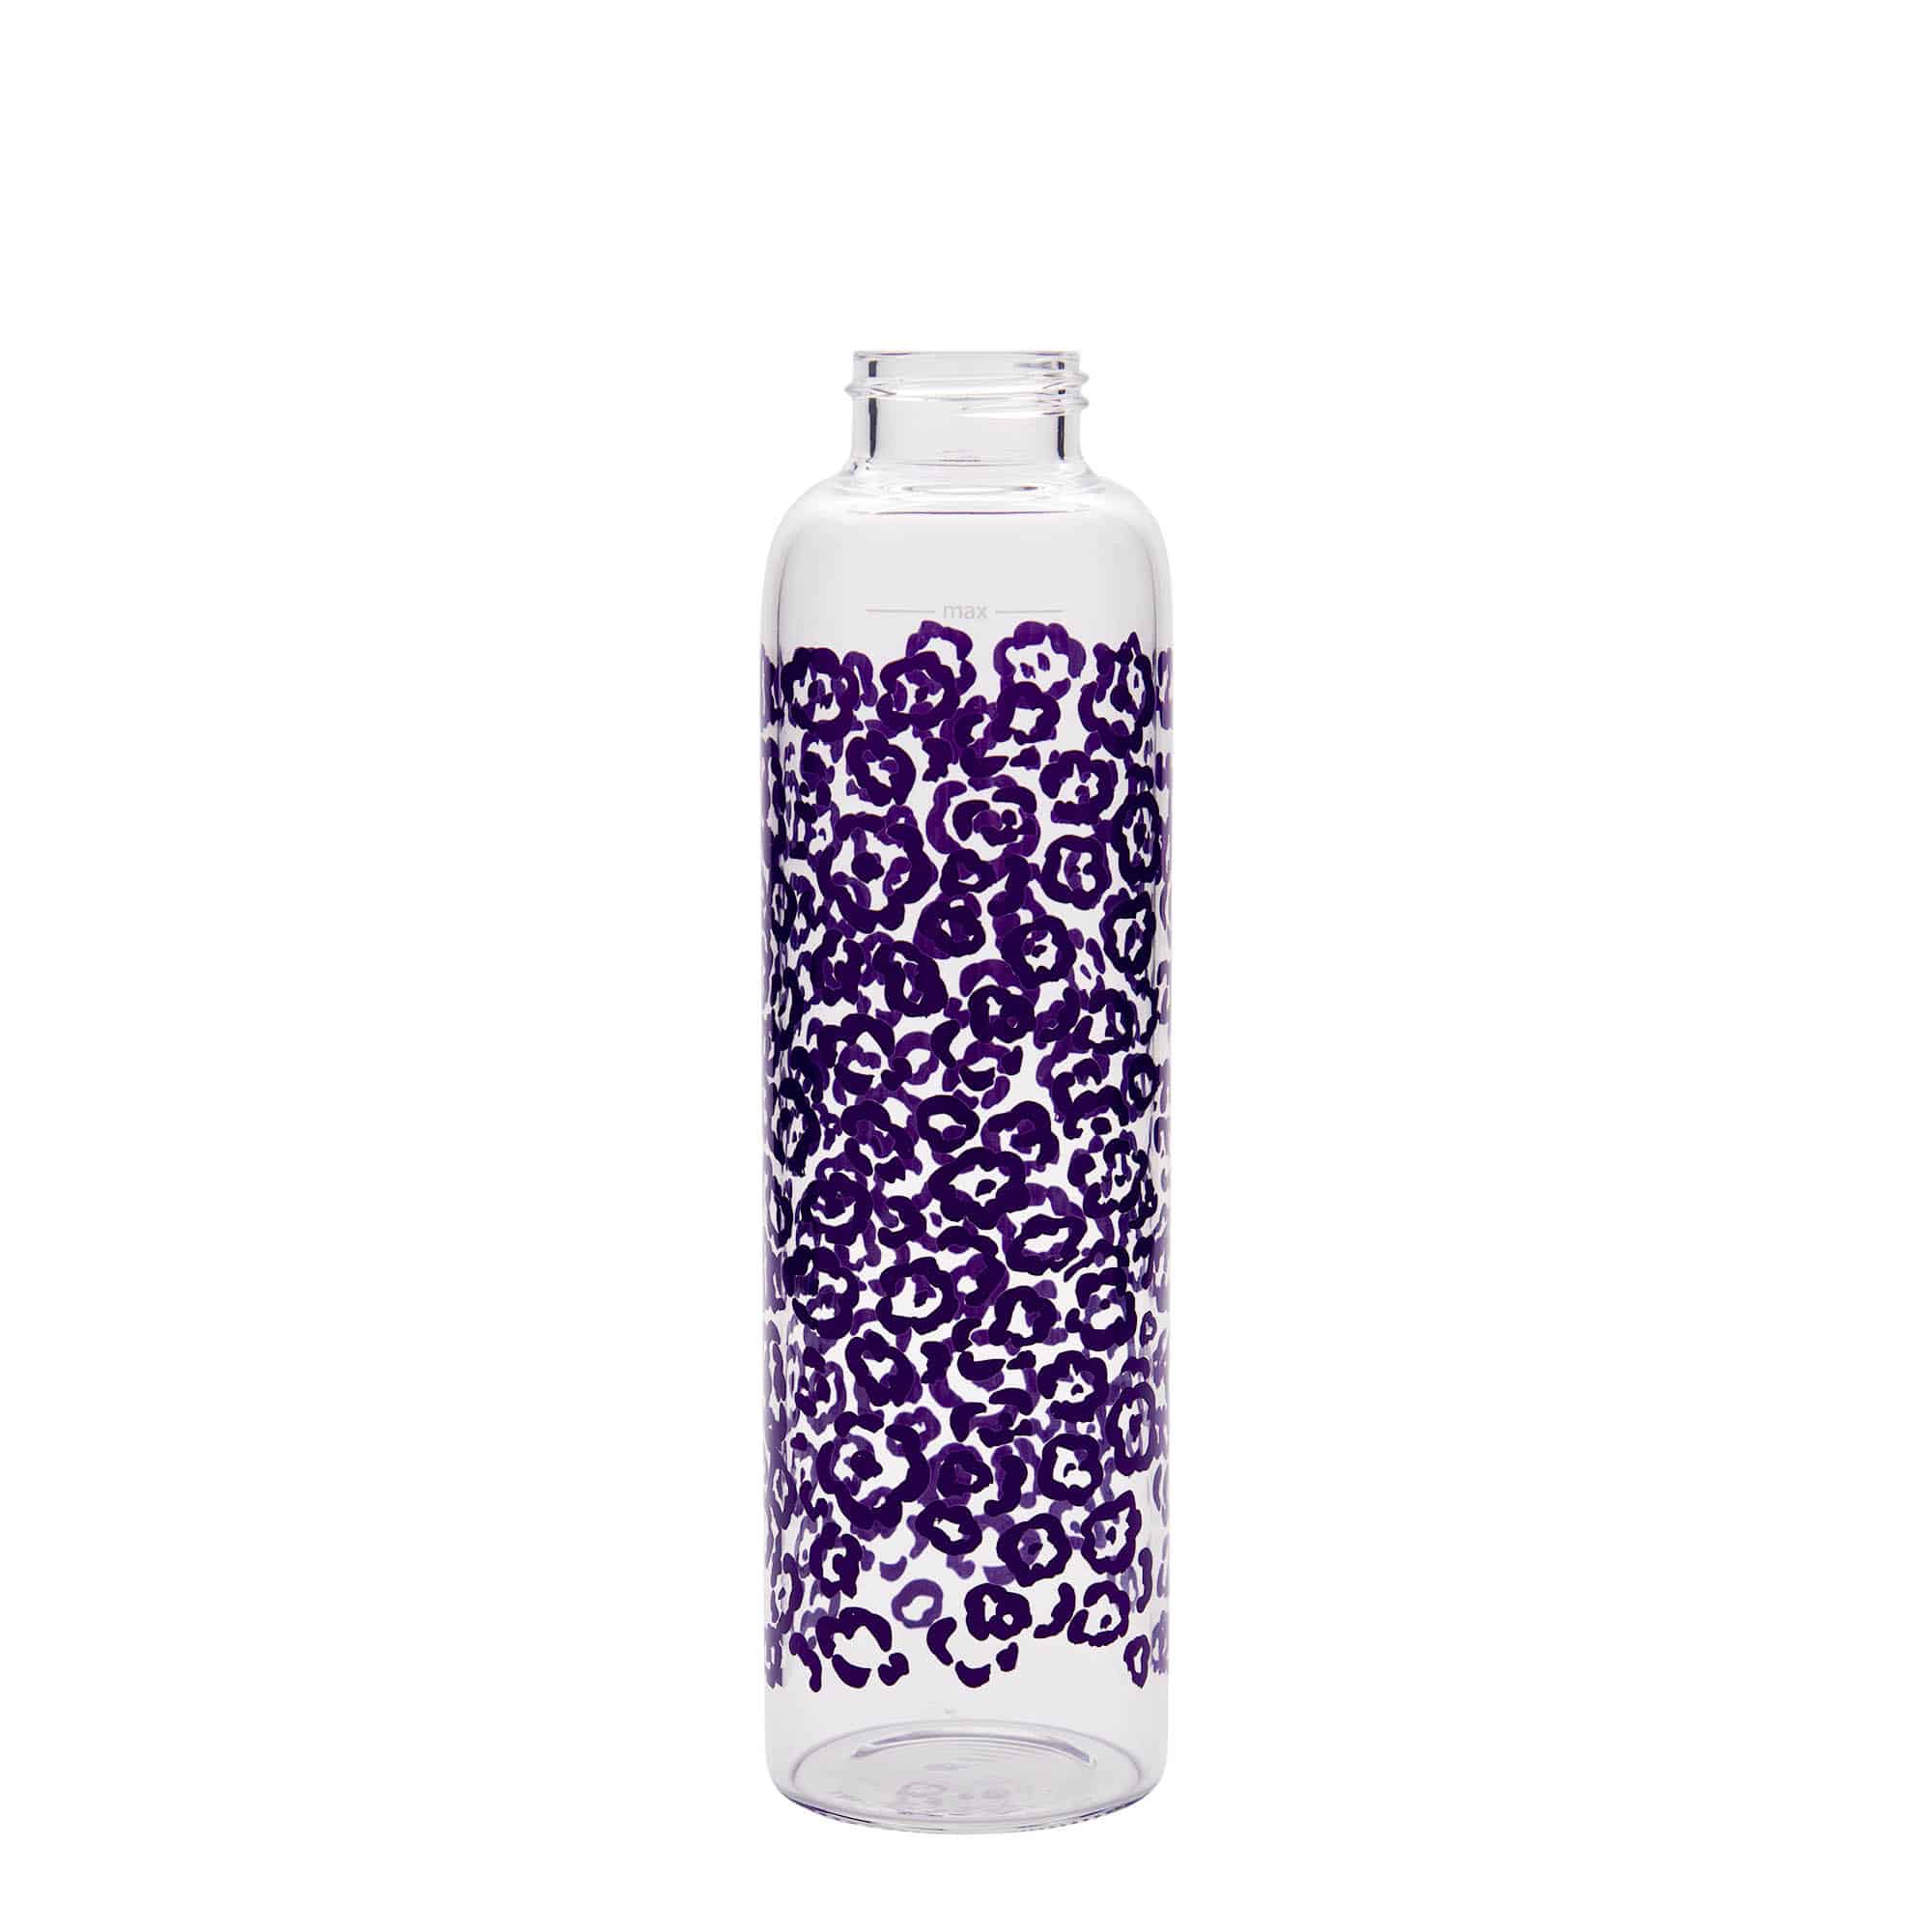 500 ml water bottle 'Perseus', print: purple flowers, closure: screw cap